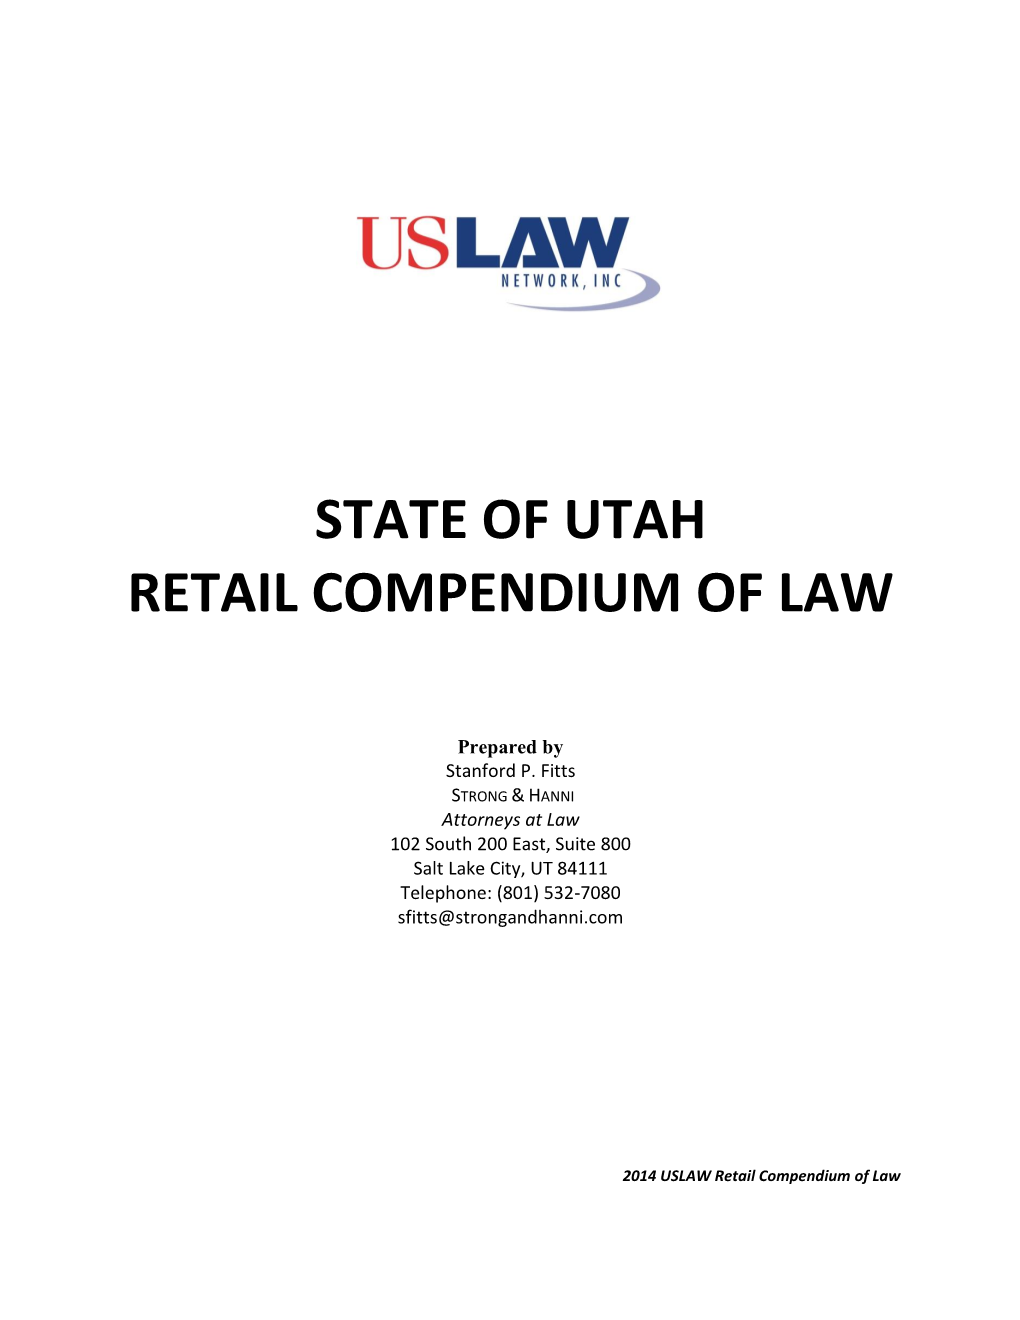 Premises Liability Laws in Utah